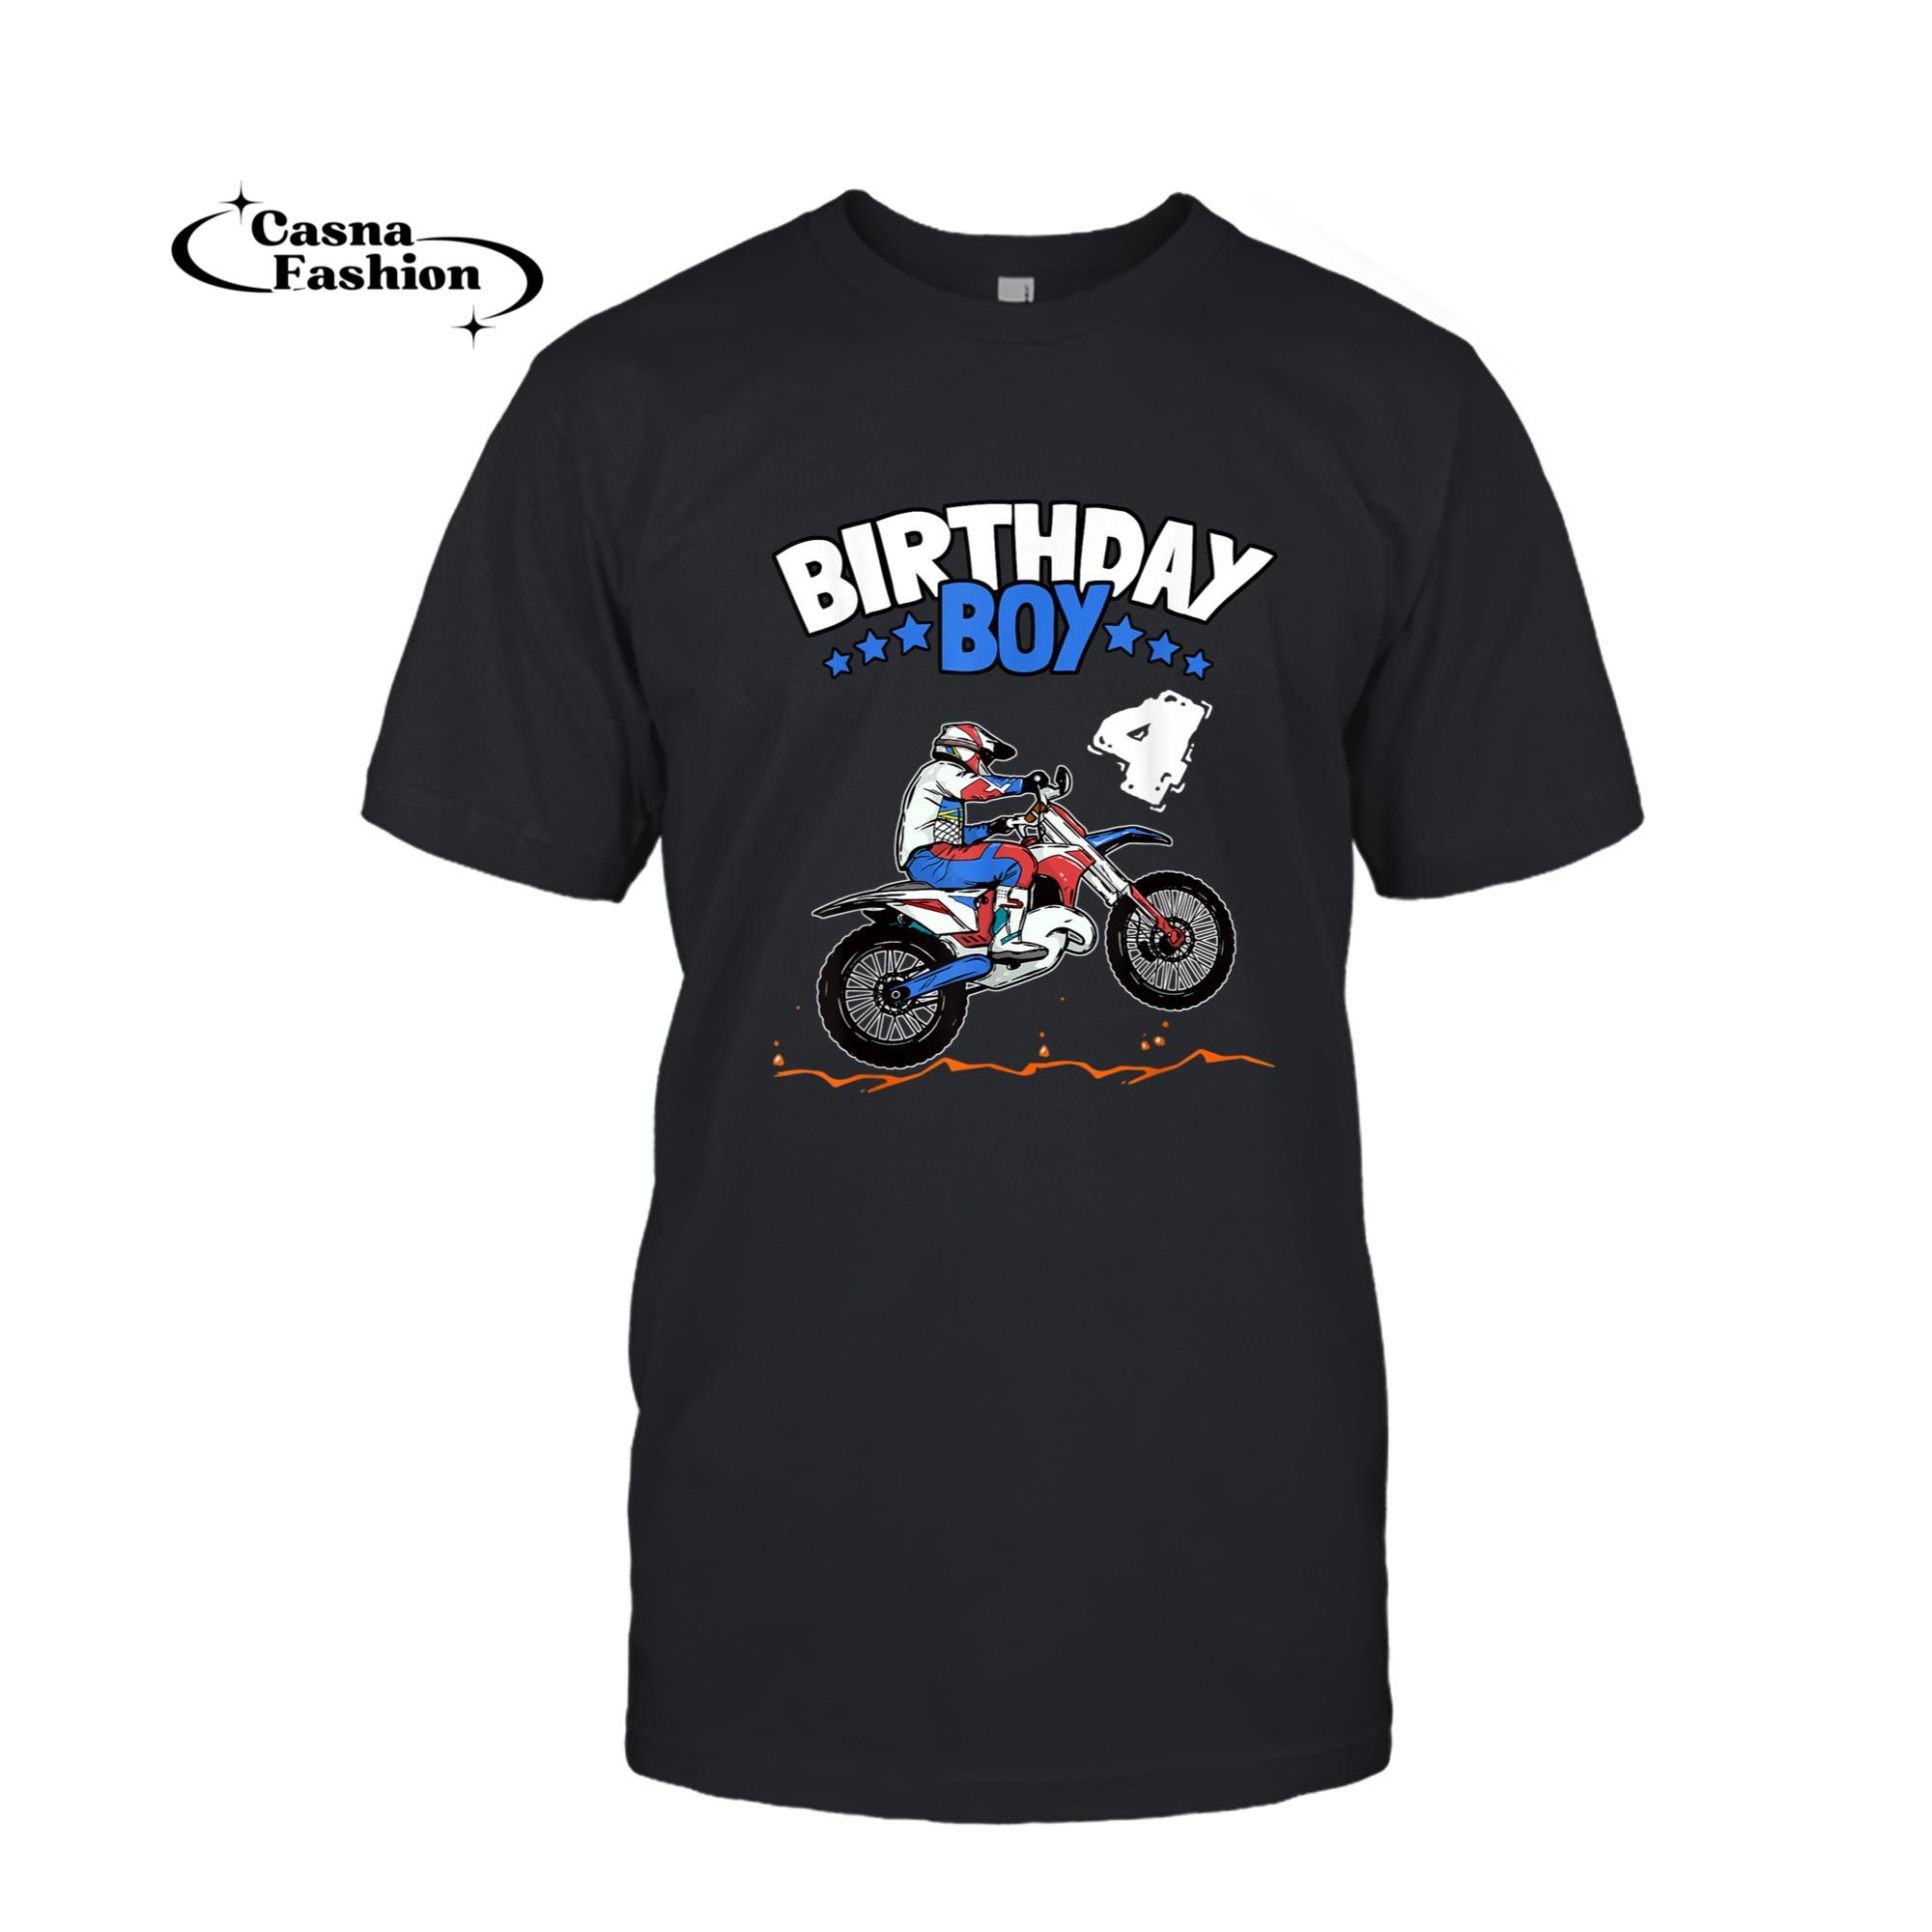 casnafashion_T-shirt_4th Birthday Boy Dirt Bike Kids 4 Years Old Boys Motocross T-Shirt_T-shirt_Black